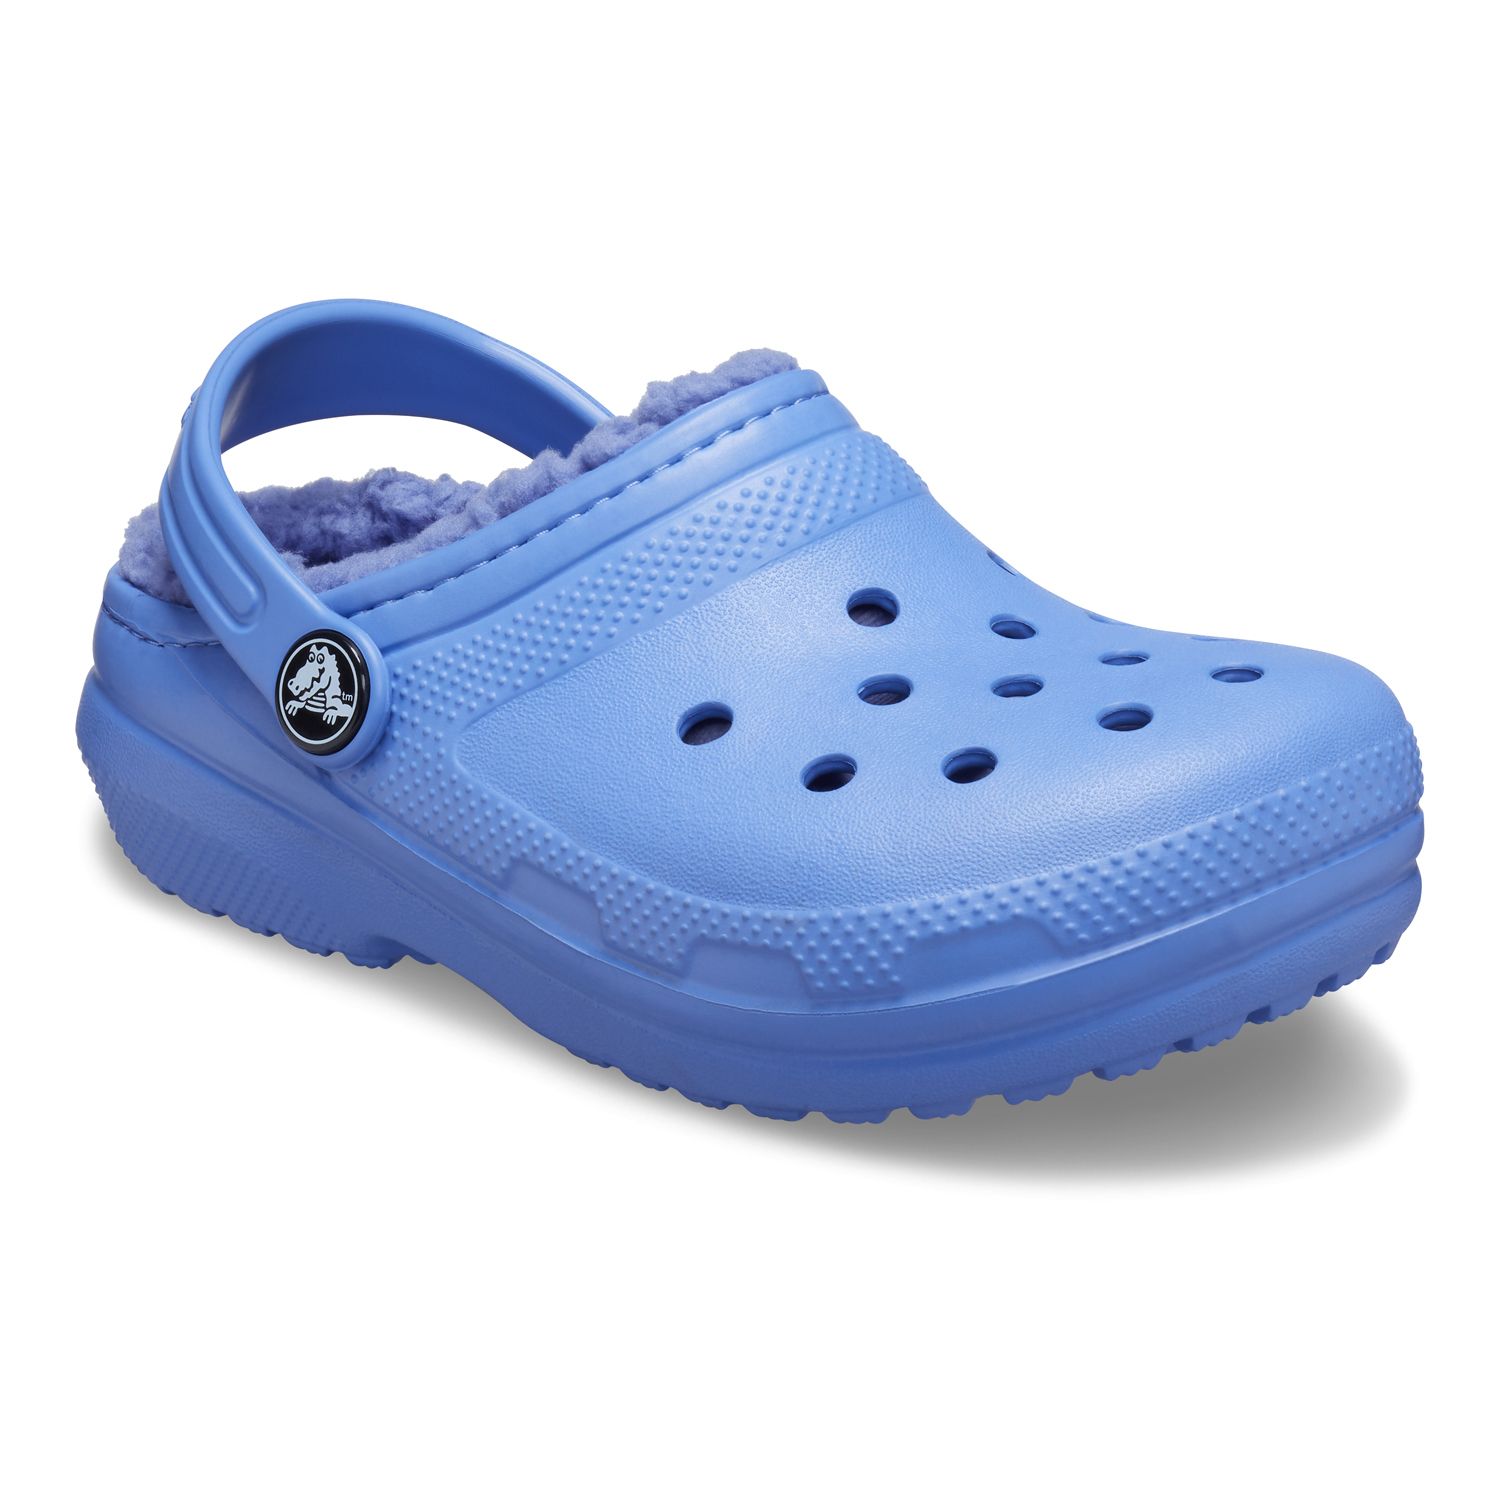 blue crocs for girls